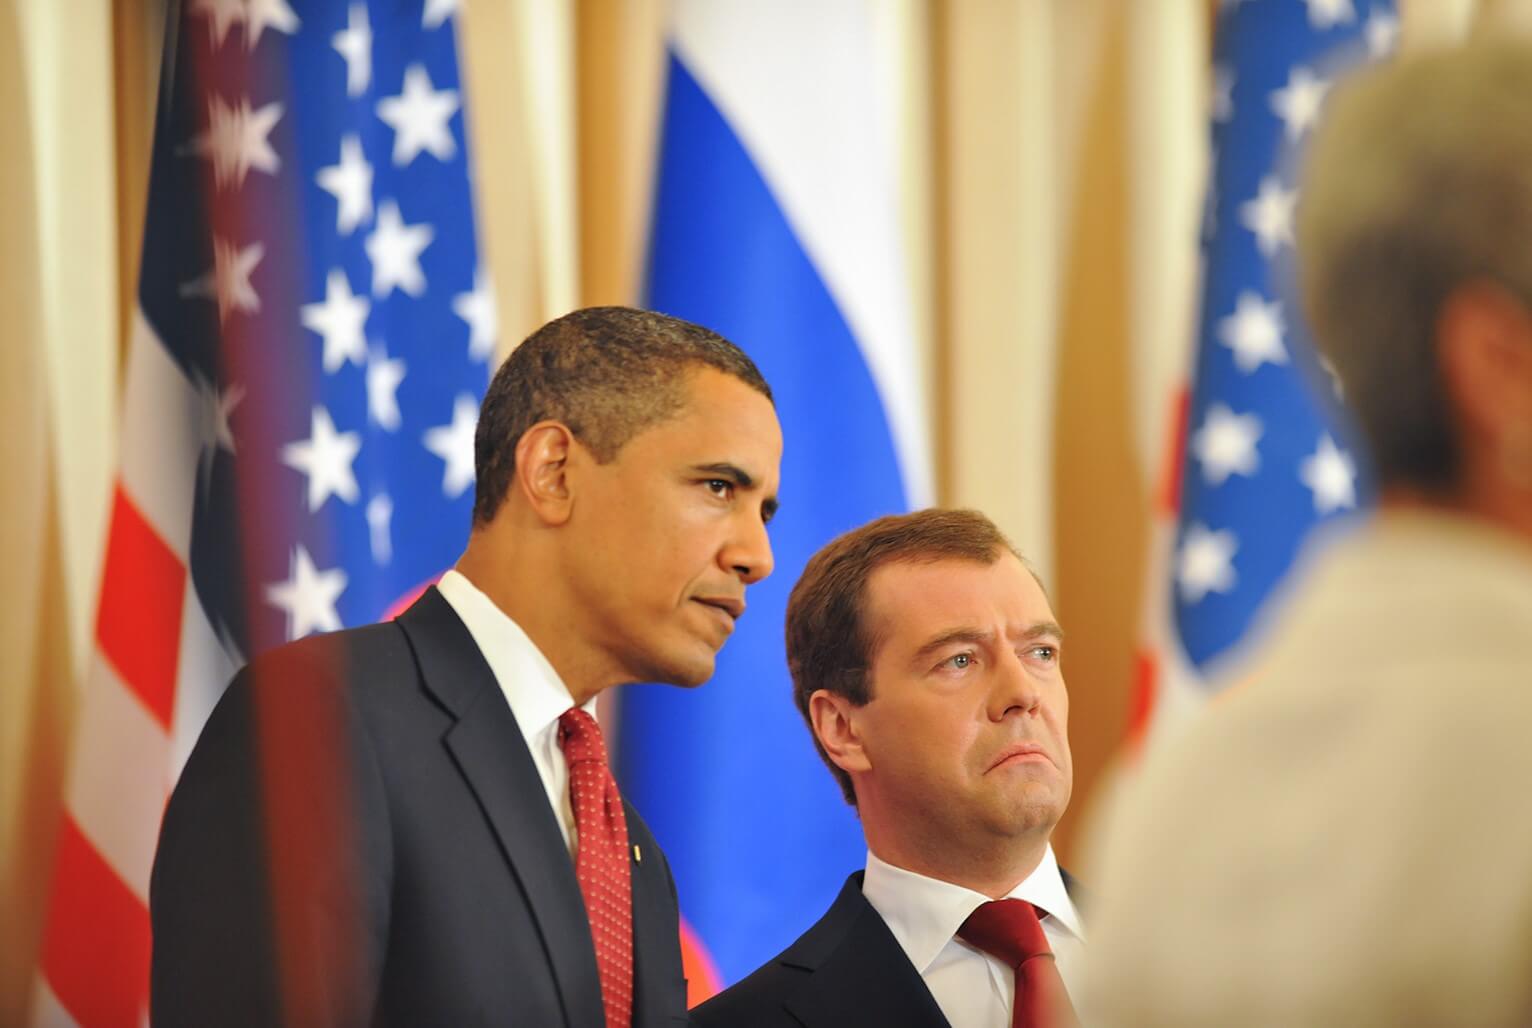 President Barack Obama and President Dmitri Medvedev in Moscow, 2009. © Mika Stetsovski / Flickr